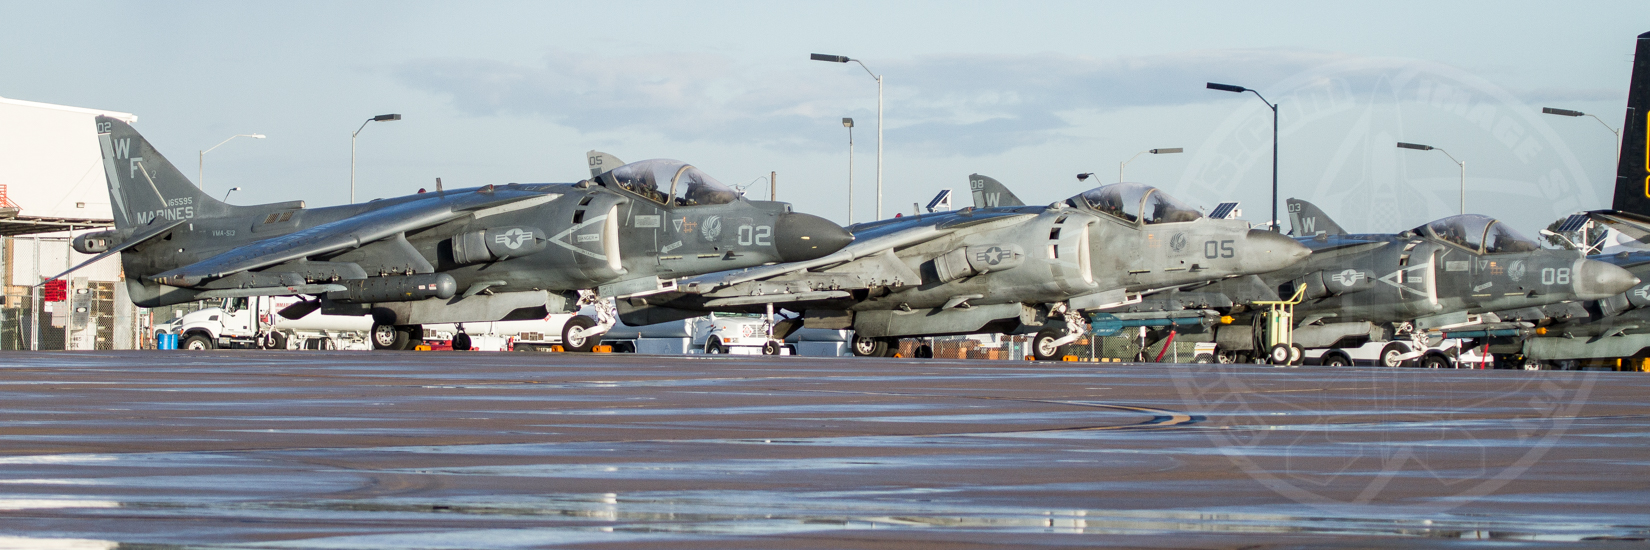 A row of AV-8B Harriers